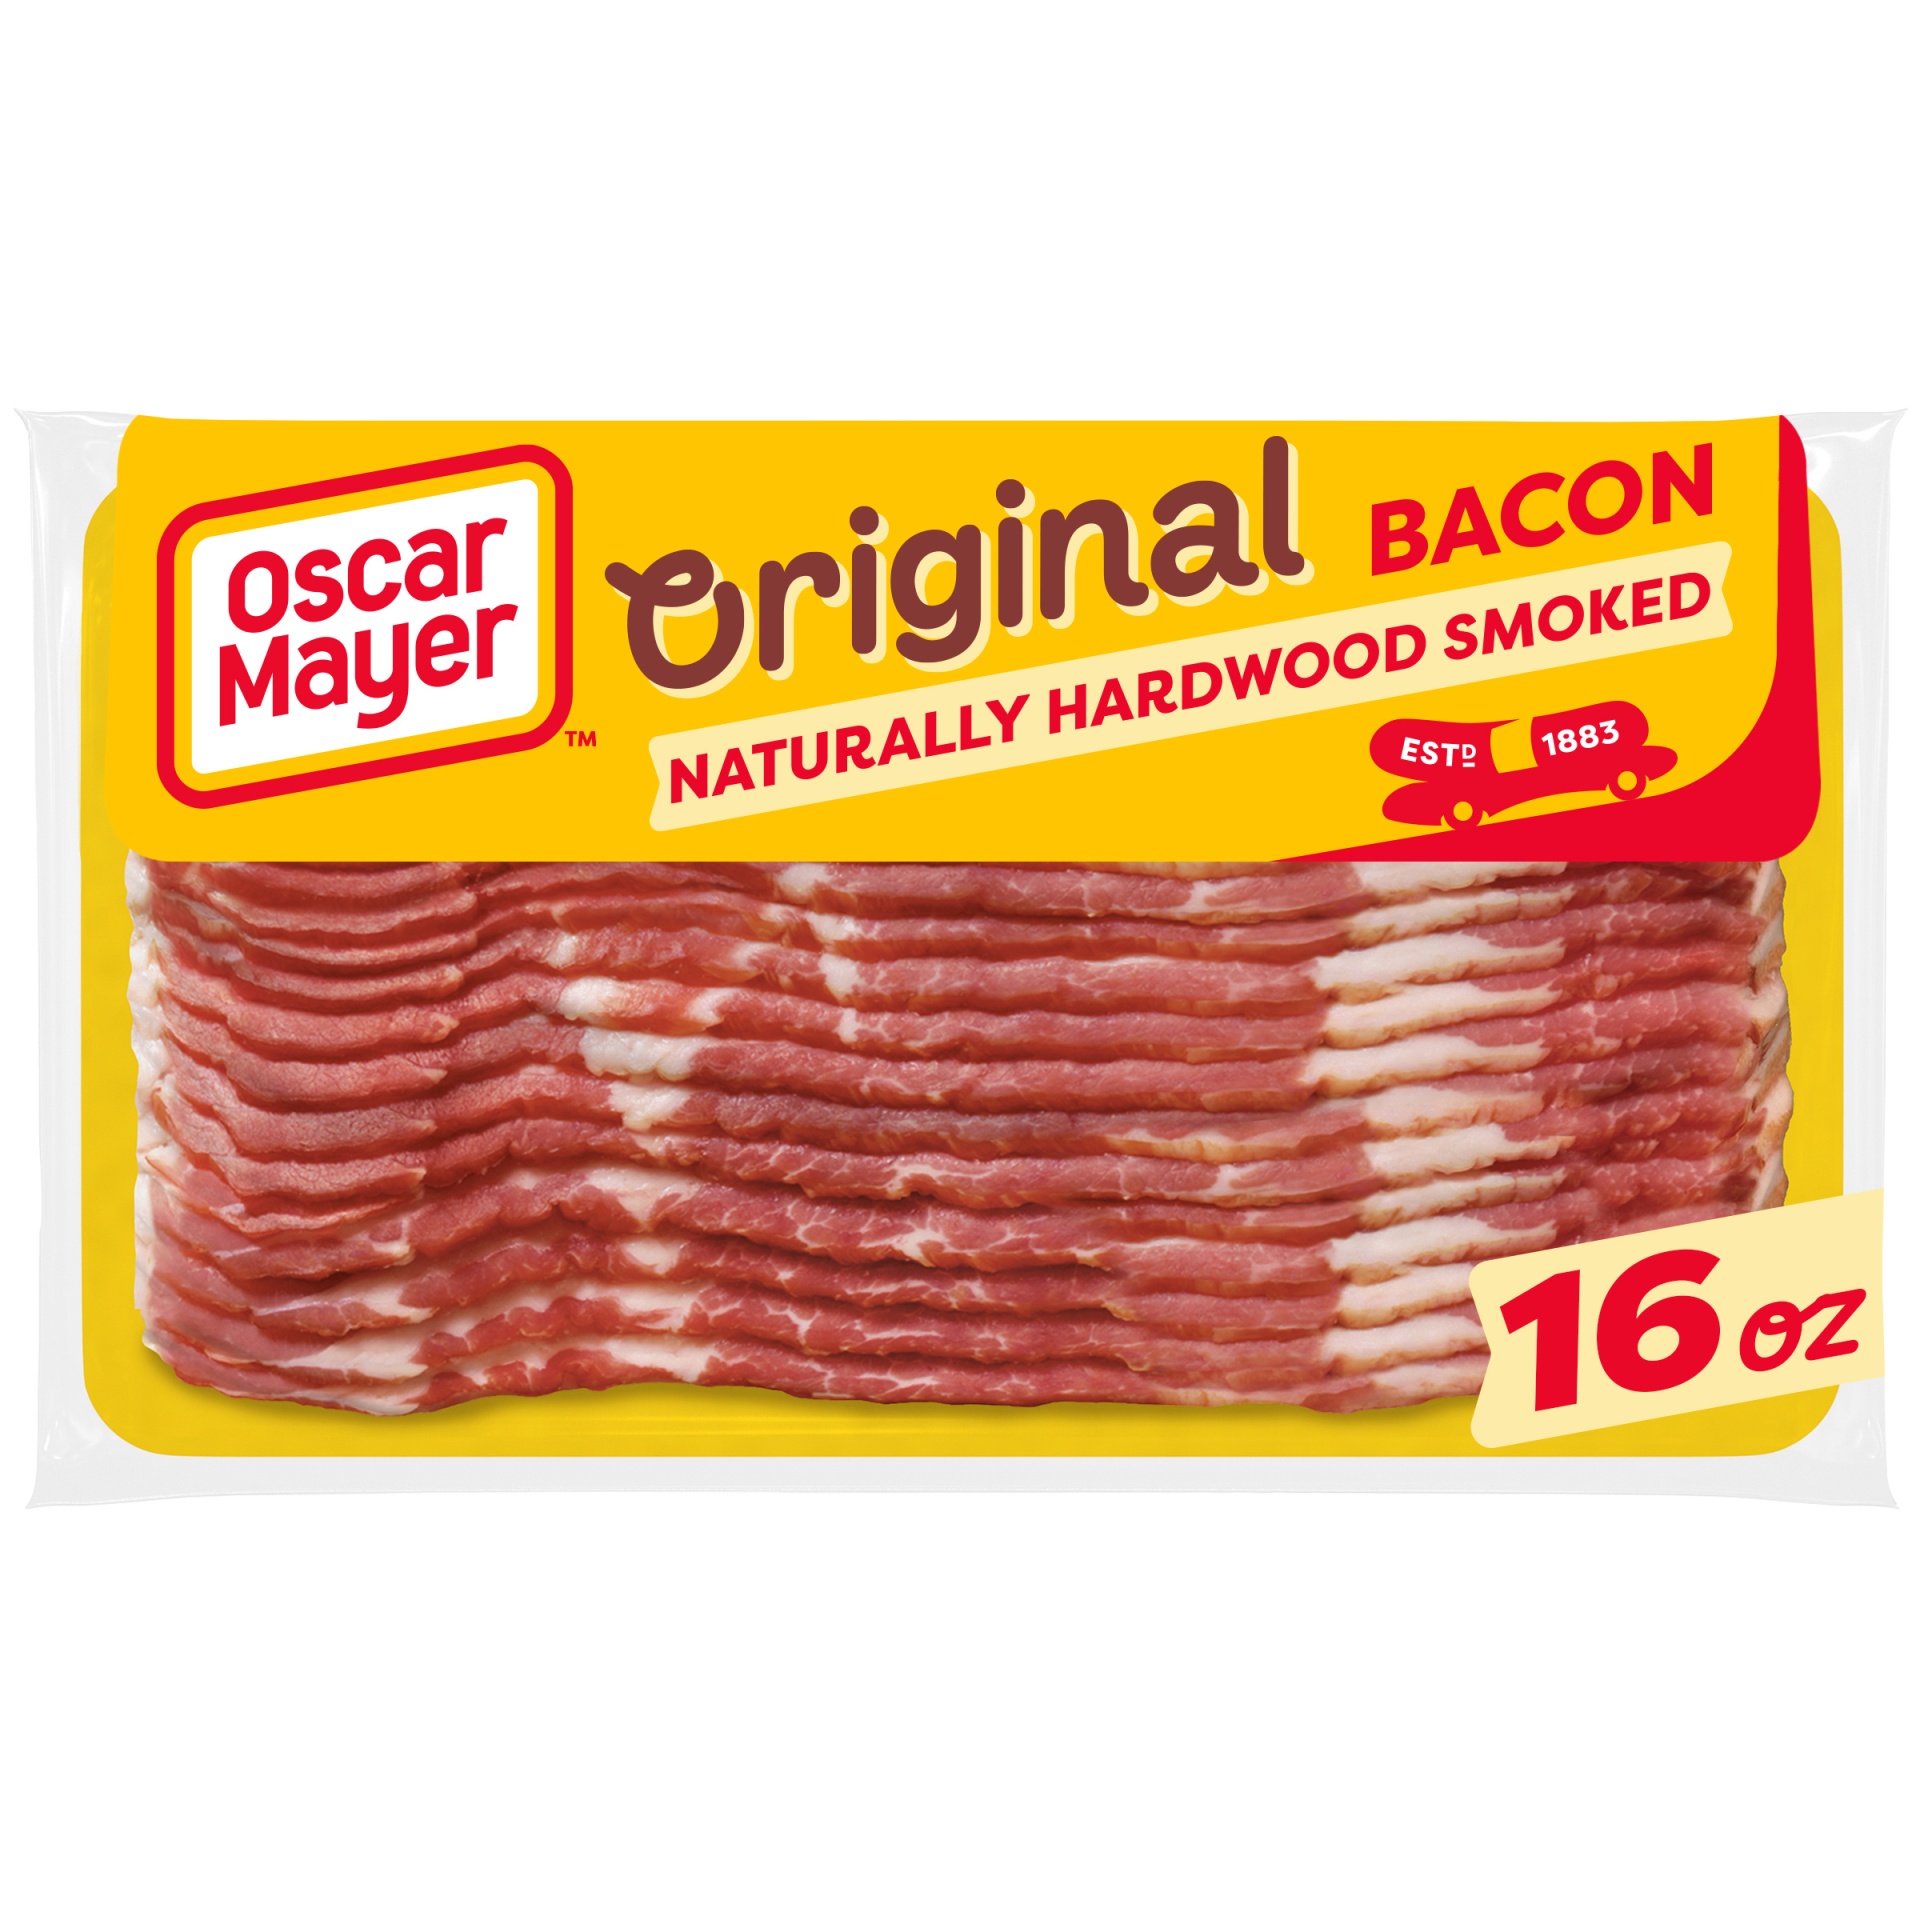 slide 1 of 1, Oscar Mayer Naturally Hardwood Smoked Bacon Pack, 17-19 slices, 16 oz